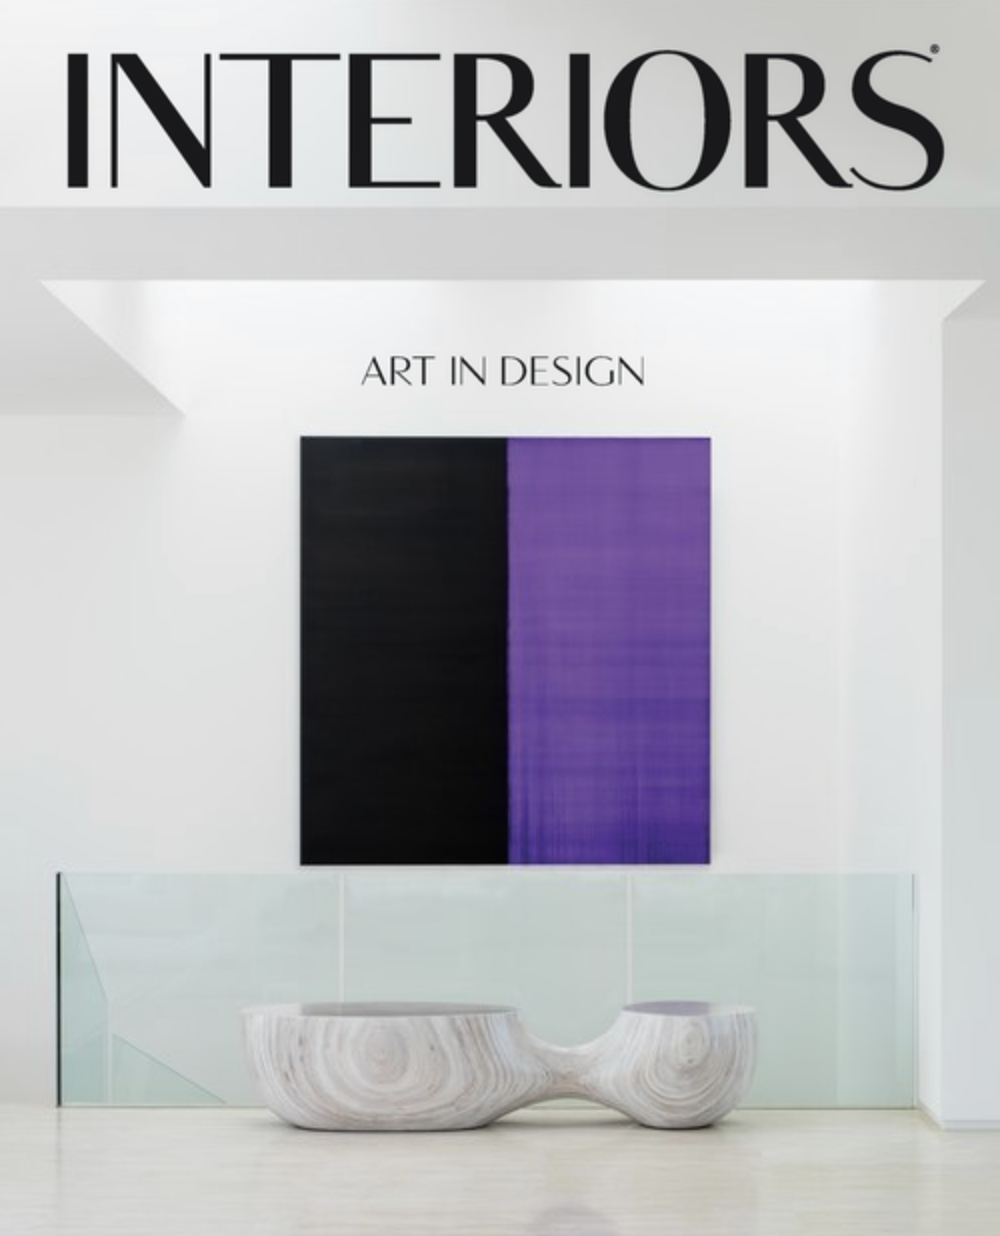 lori-dennis-featured-in-interiors-magazine-with-bobby-berk-ryan-saghian-at-westedge-design-los-angeles